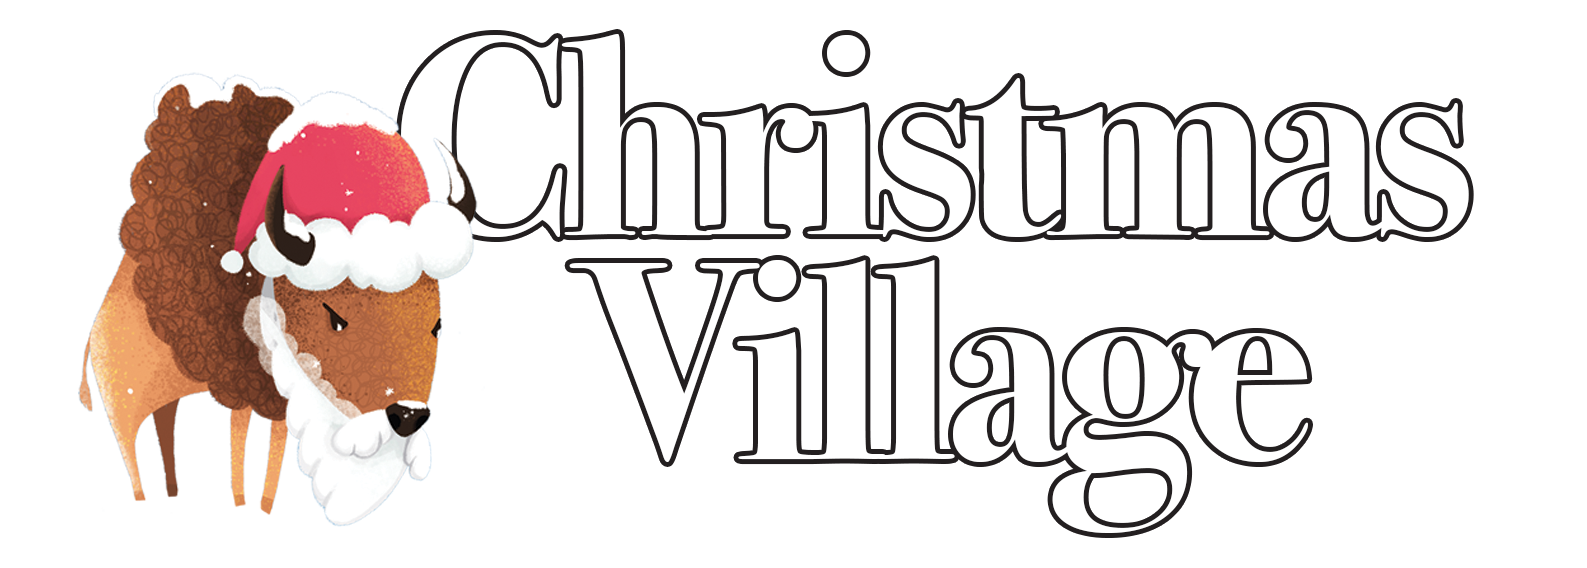 Christmasvillage_butffalo.png